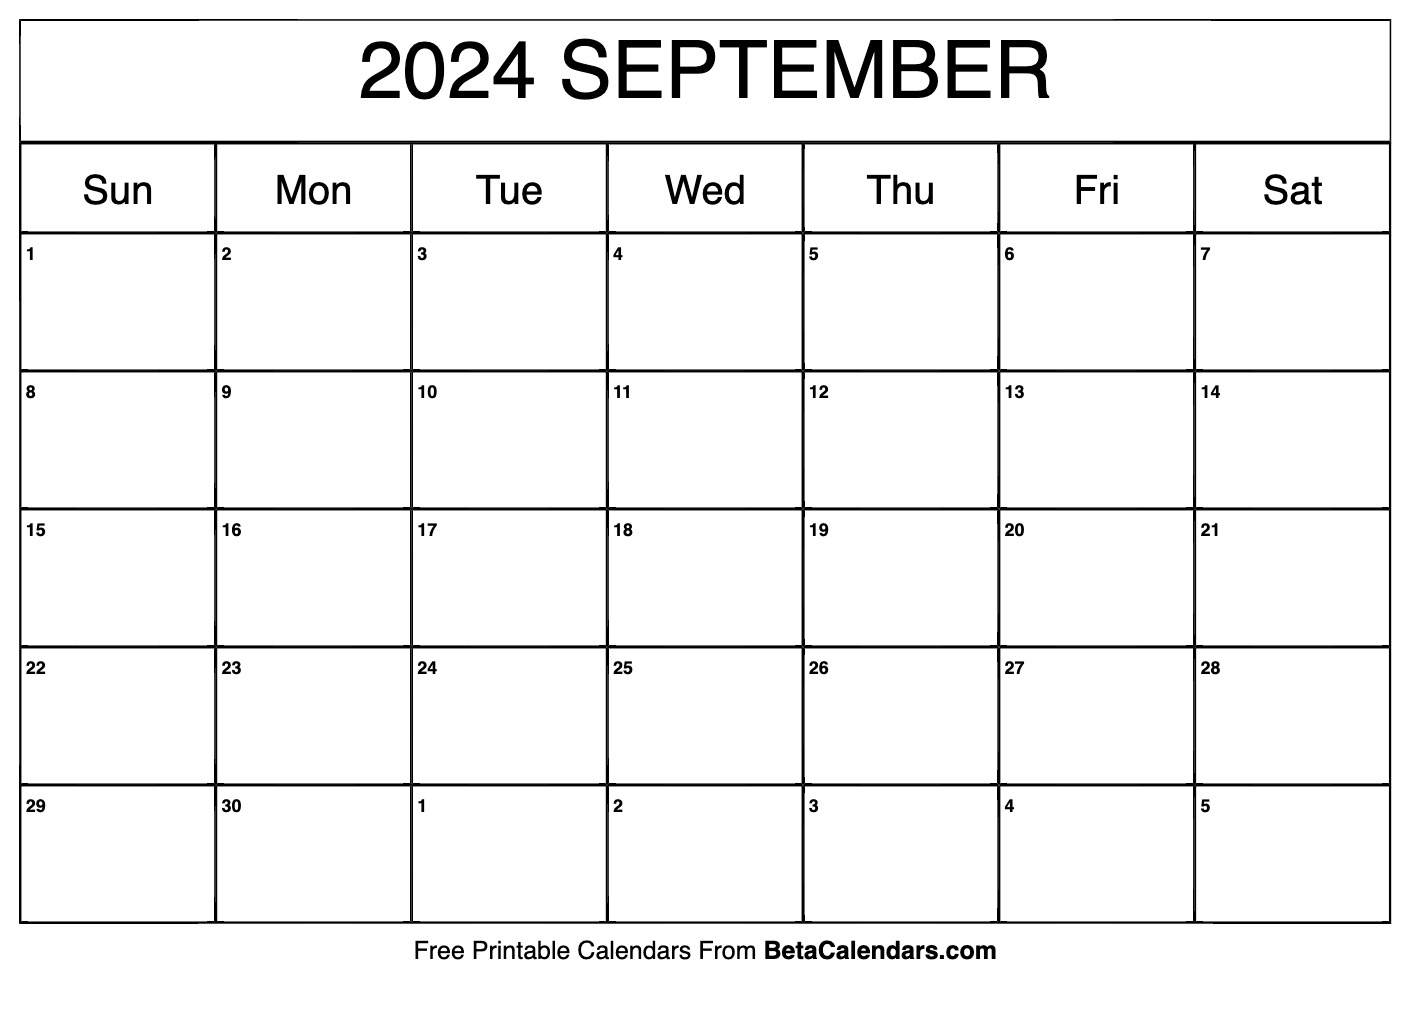 Free Printable September 2024 Calendar